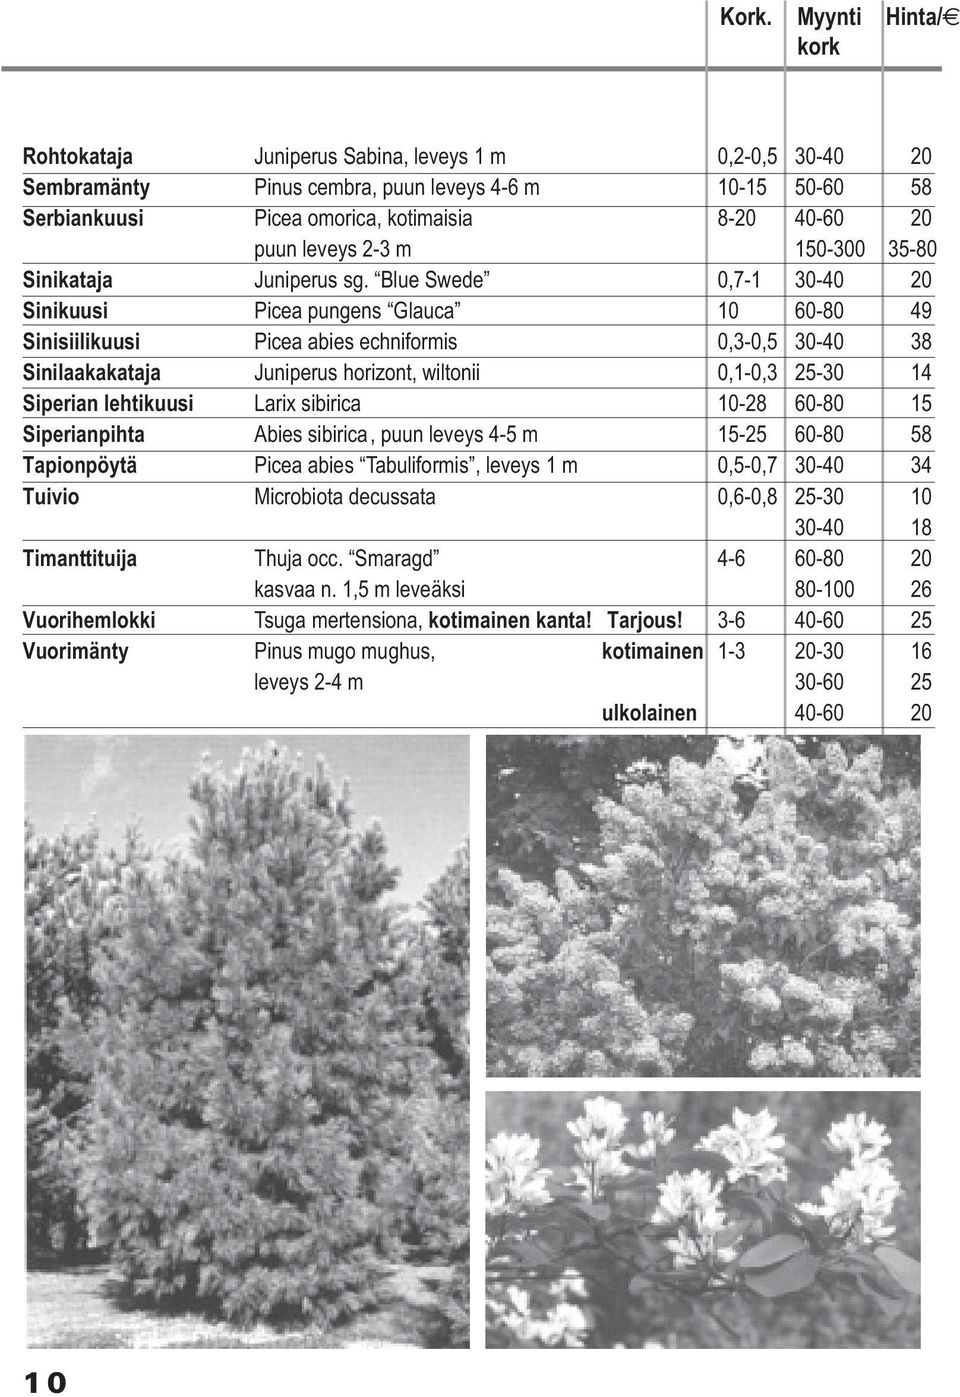 Blue Swede 0,7-1 30-40 20 Sinikuusi Picea pungens Glauca 10 60-80 49 Sinisiilikuusi Picea abies echniformis 0,3-0,5 30-40 38 Sinilaakakataja Juniperus horizont, wiltonii 0,1-0,3 25-30 14 Siperian